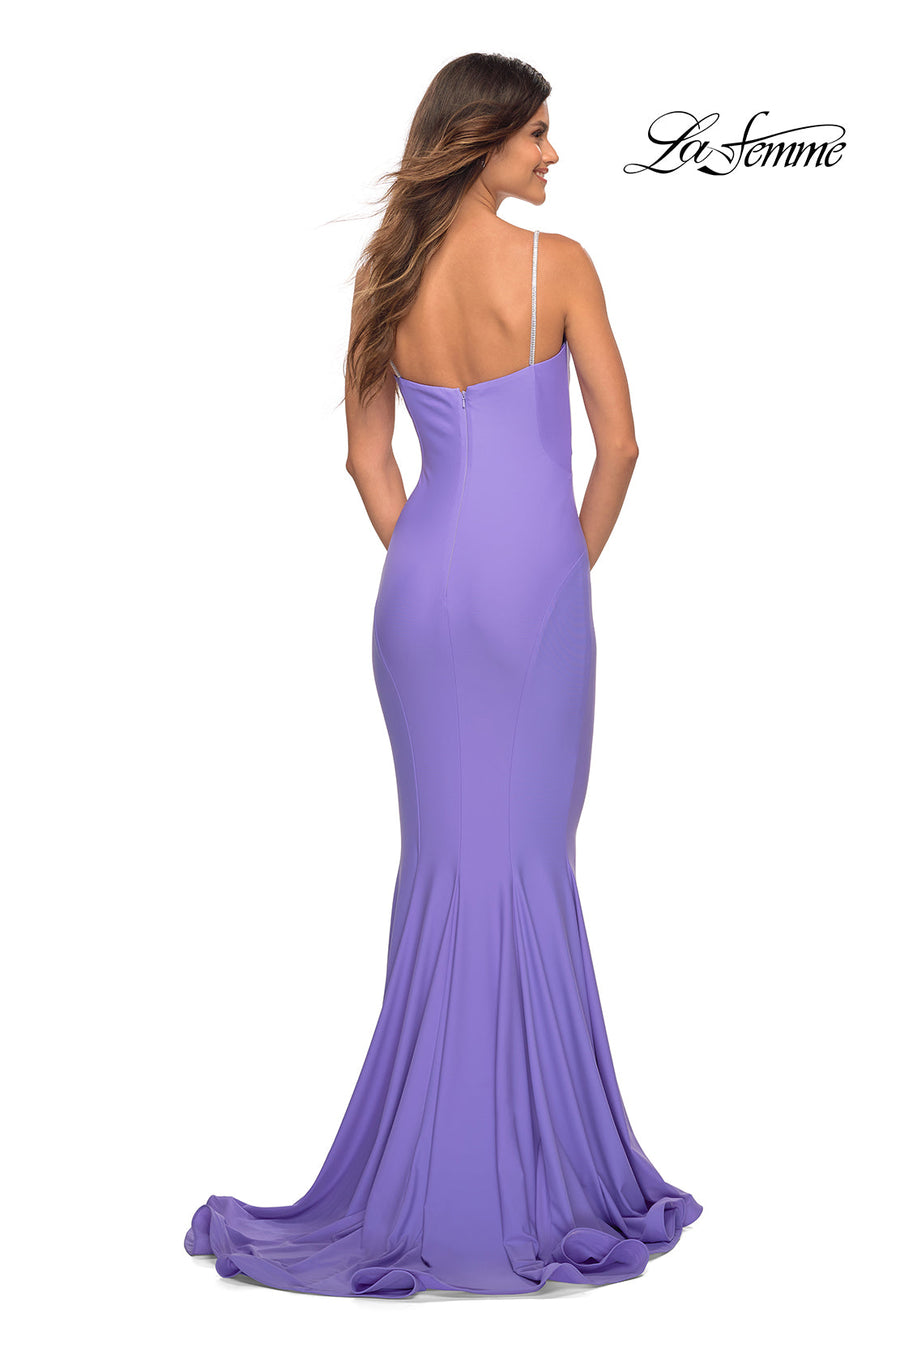 La Femme 30782 prom dress images.  La Femme 30782 is available in these colors: Aqua, Periwinkle.